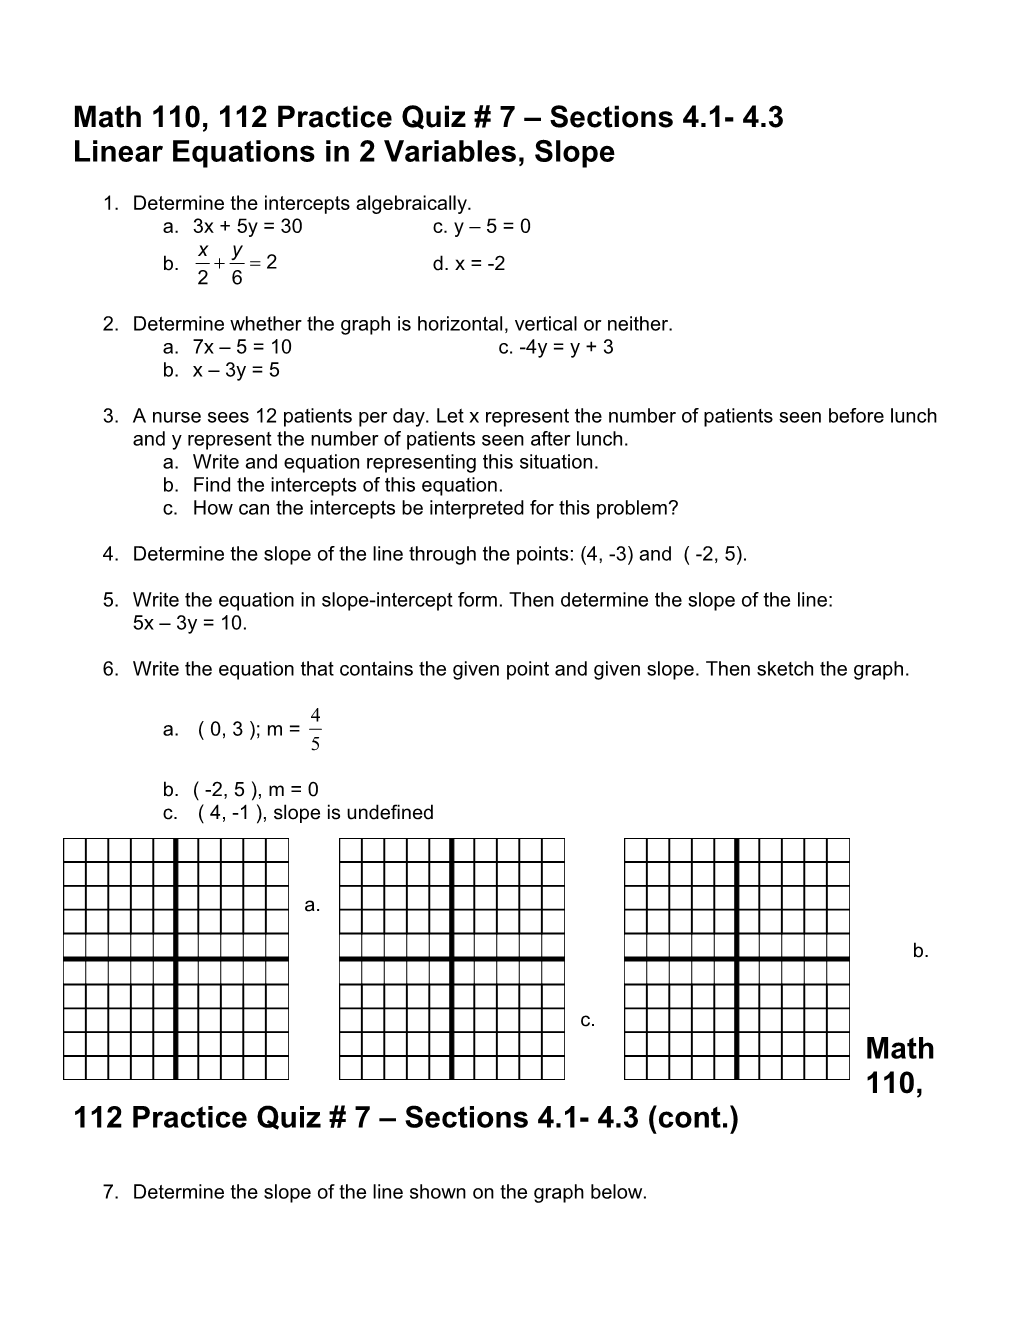 Math 110, 111 Practice Quiz # 5 Sections 3 s2